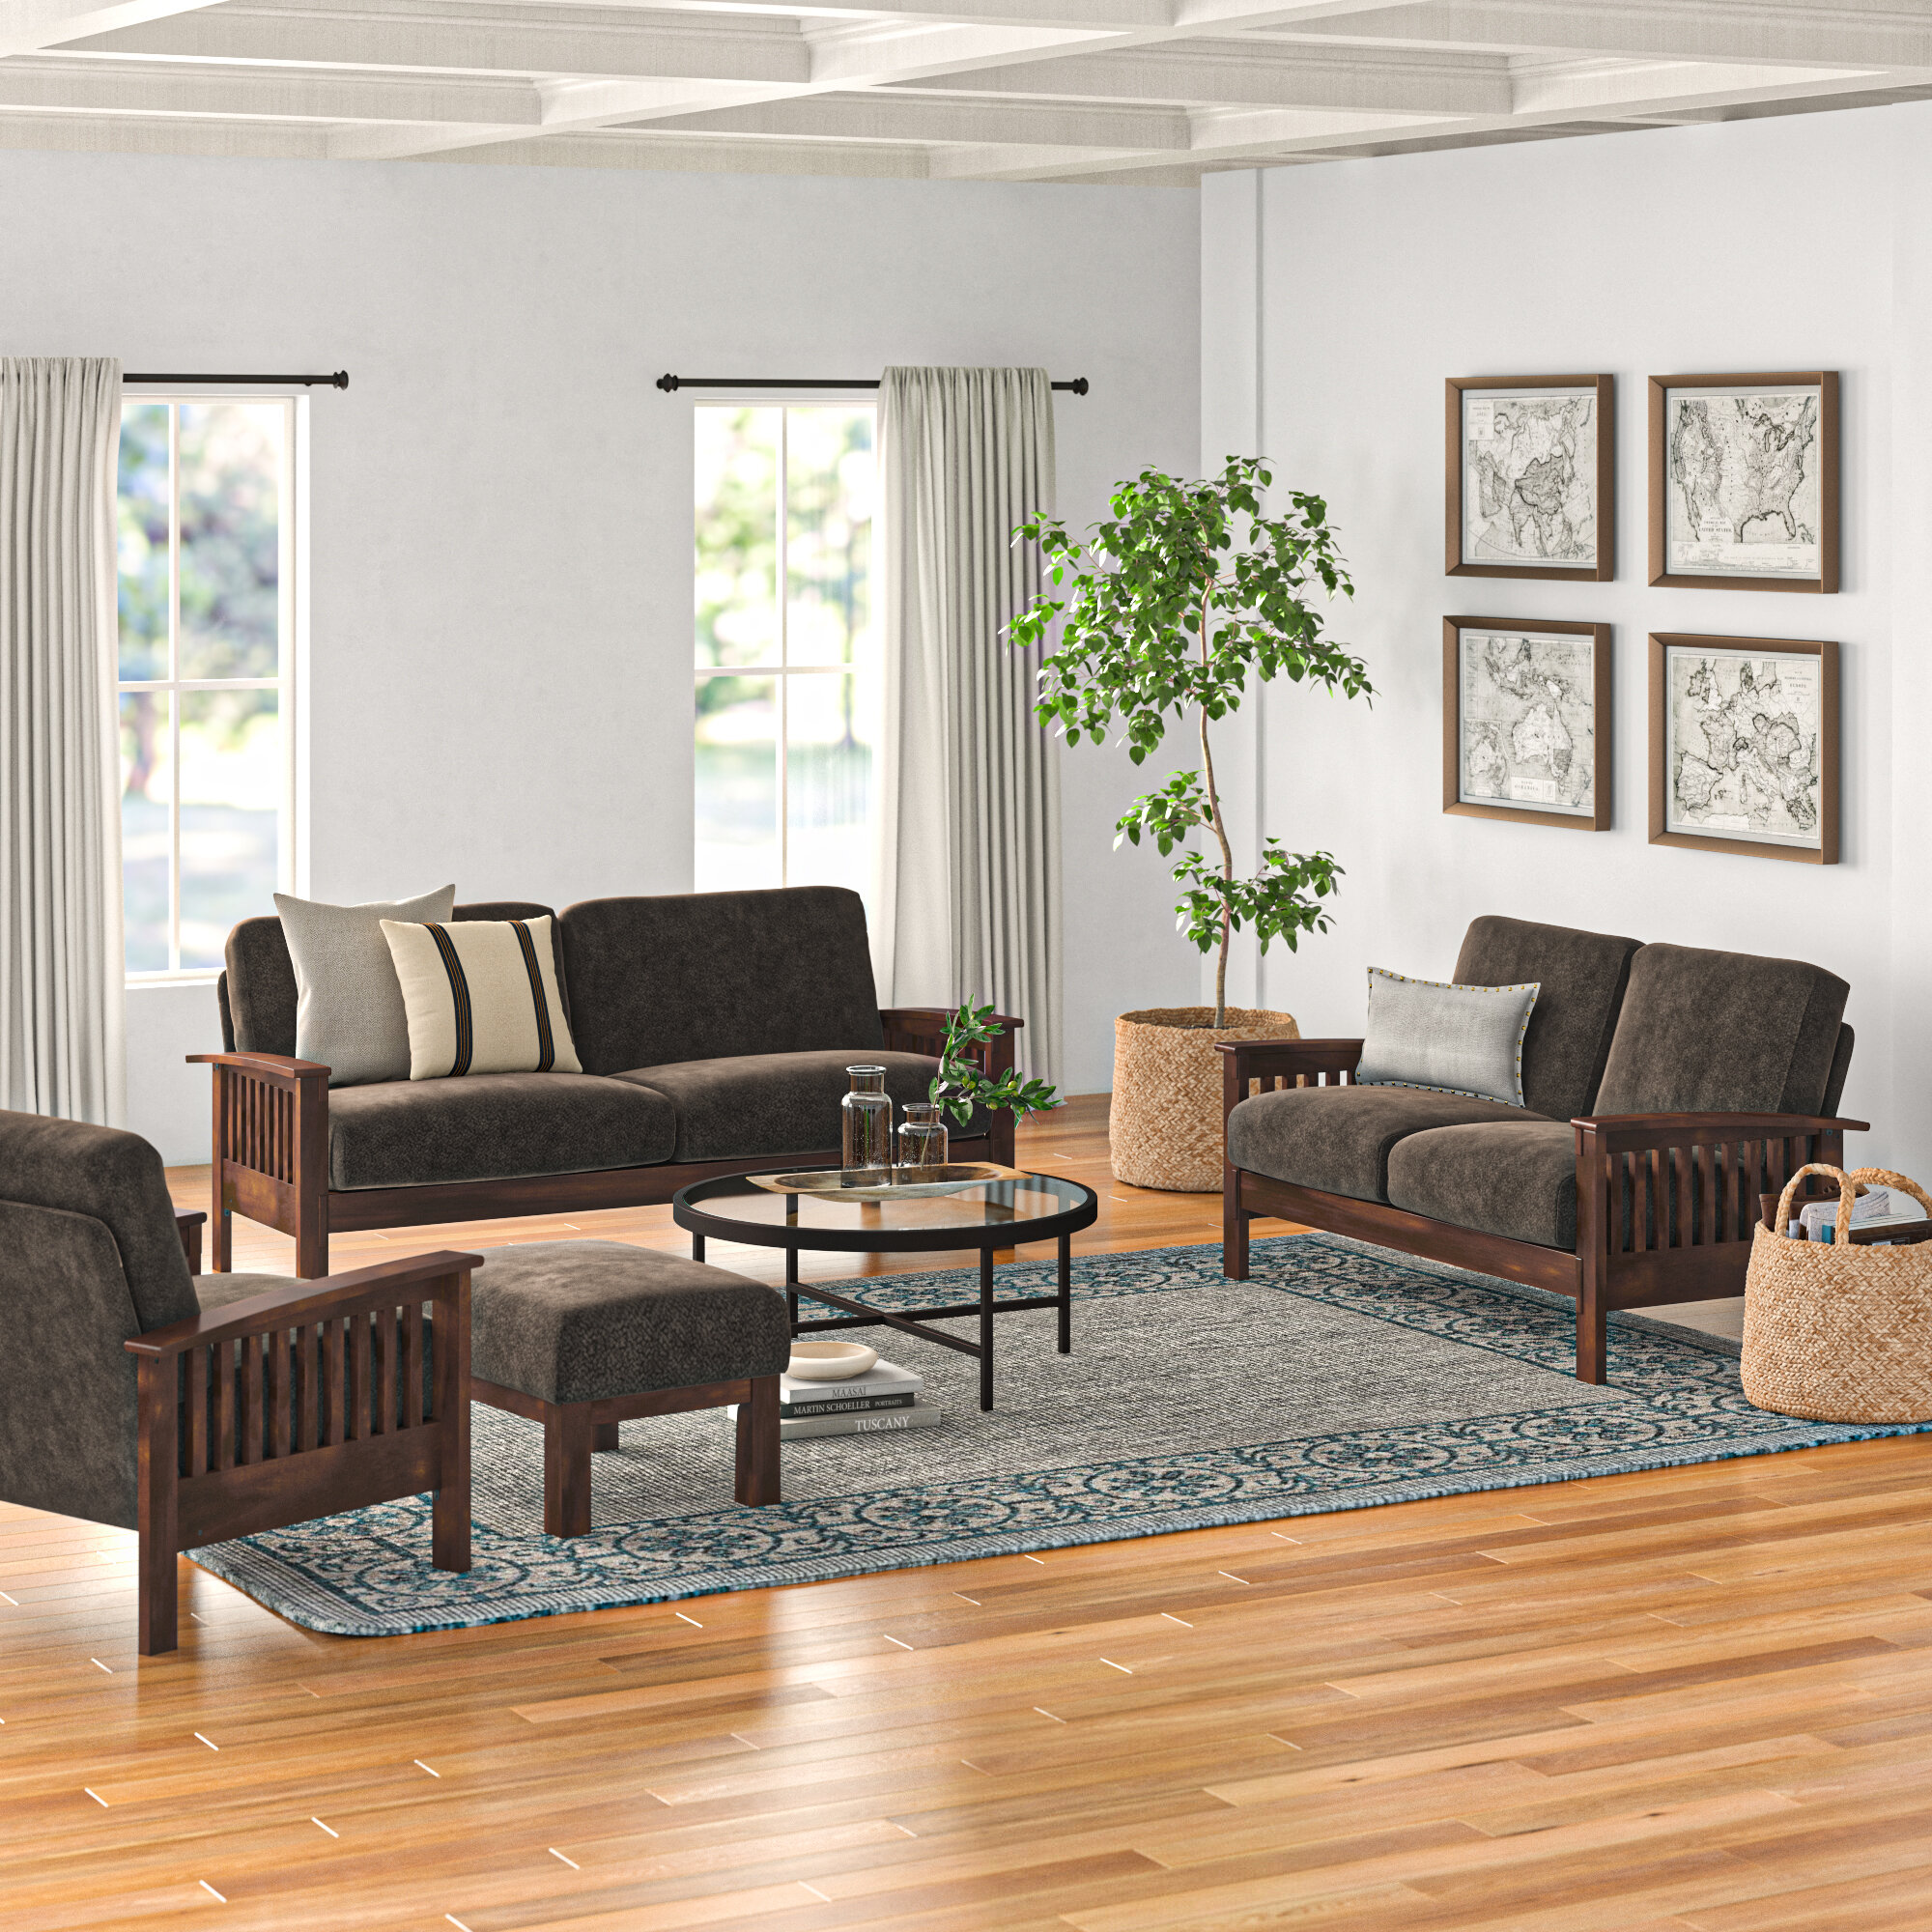 Encinal 4 Piece Living Room Set